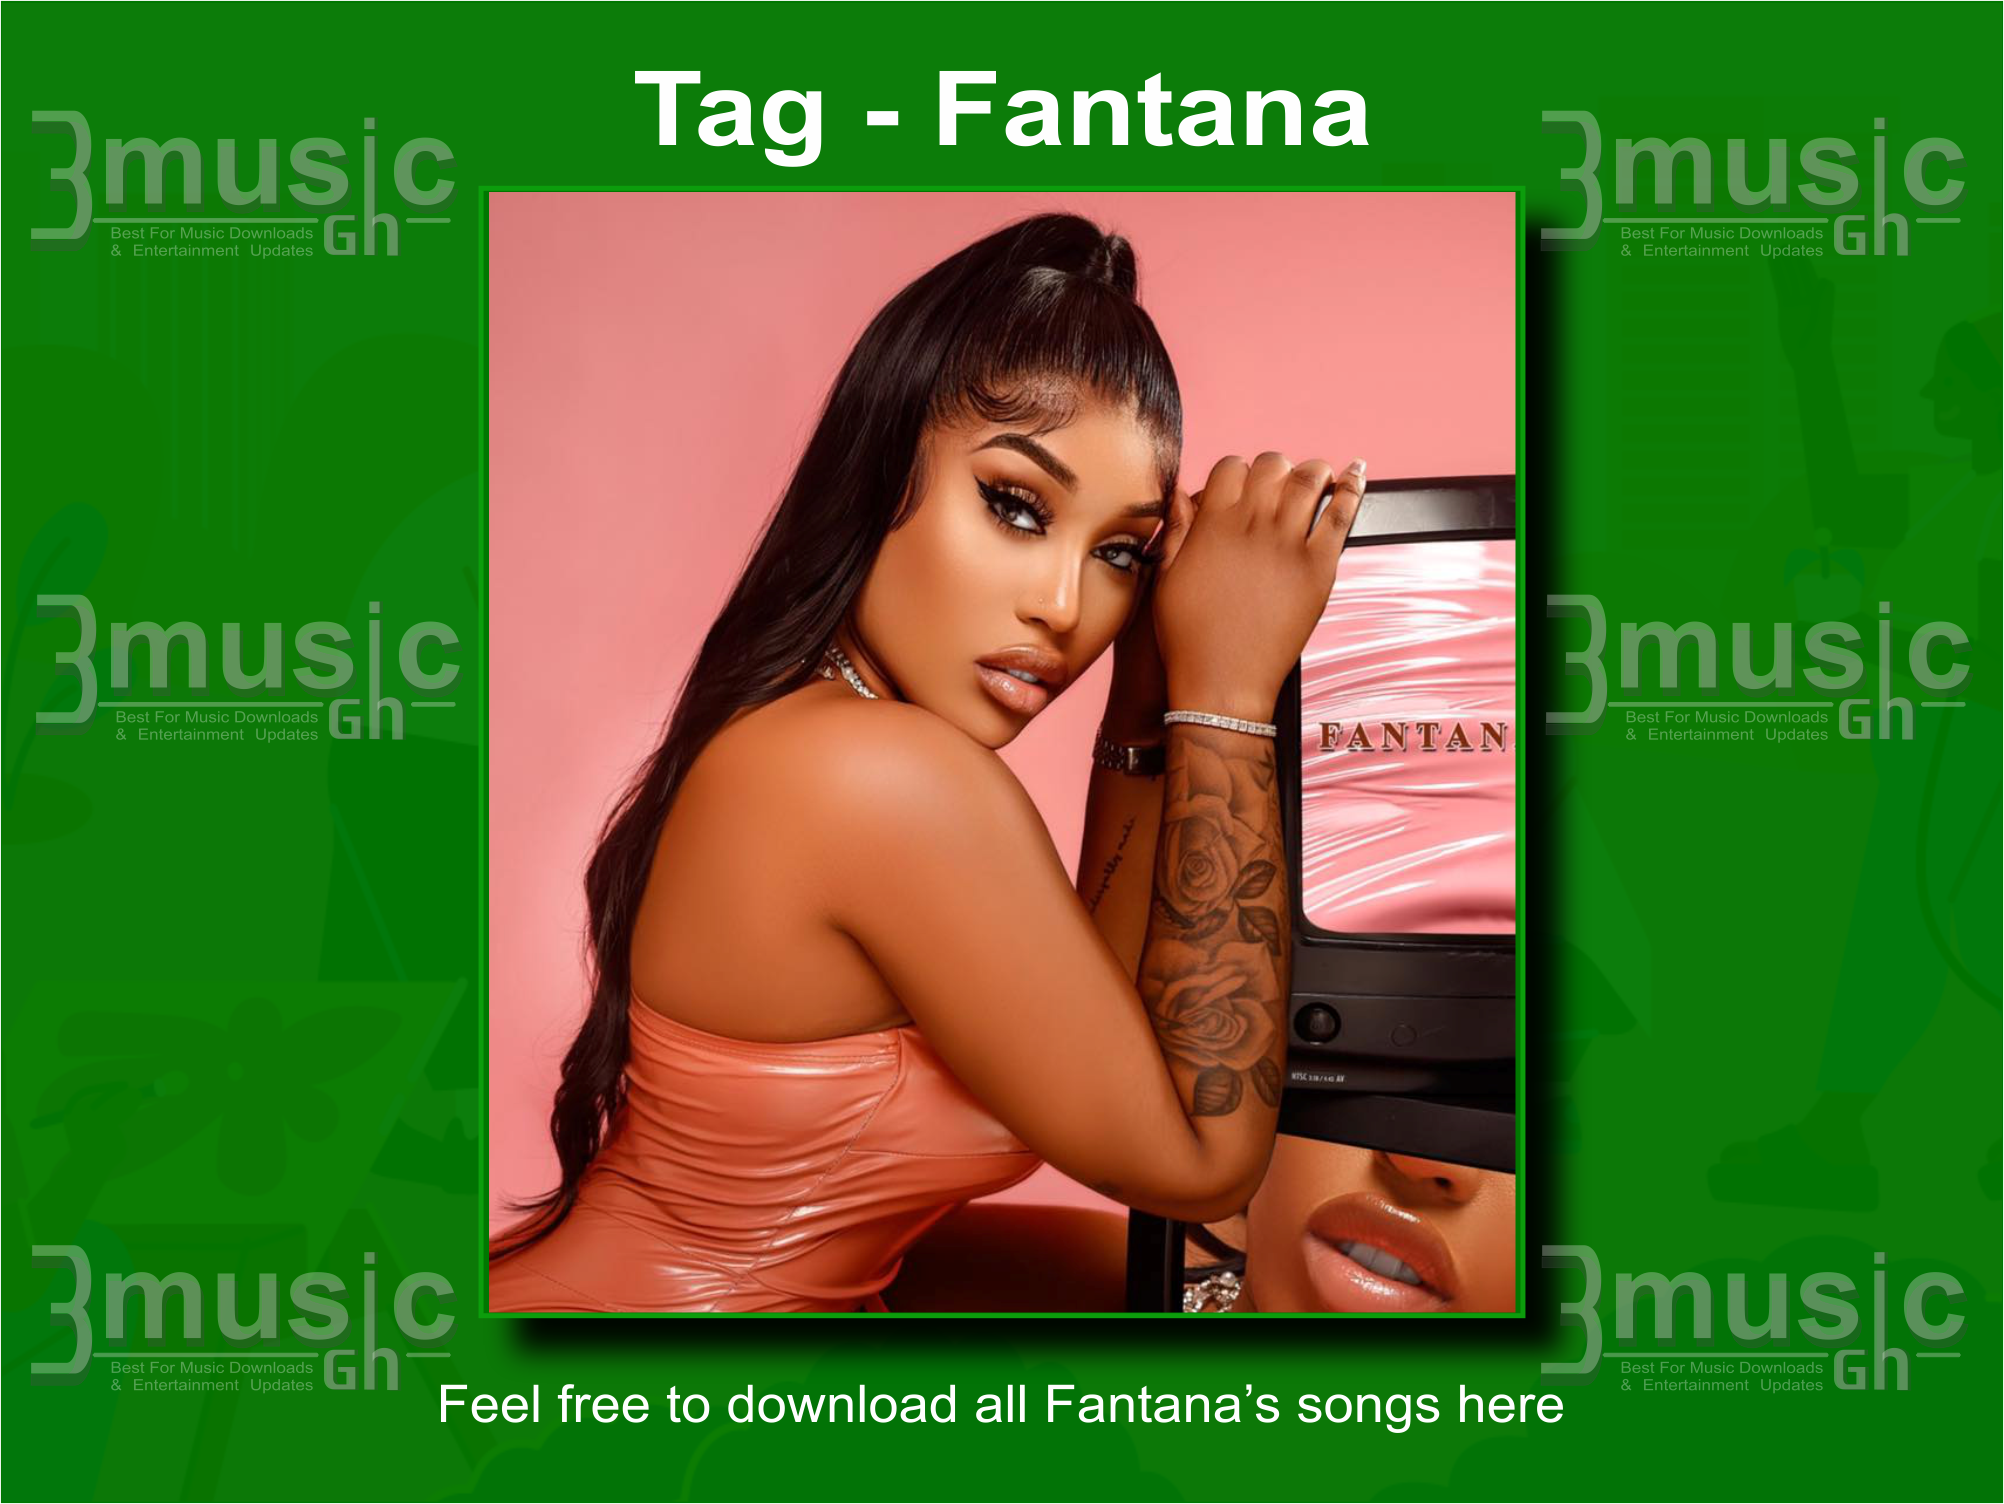 Fantana songs all download_ 3musicgh.com